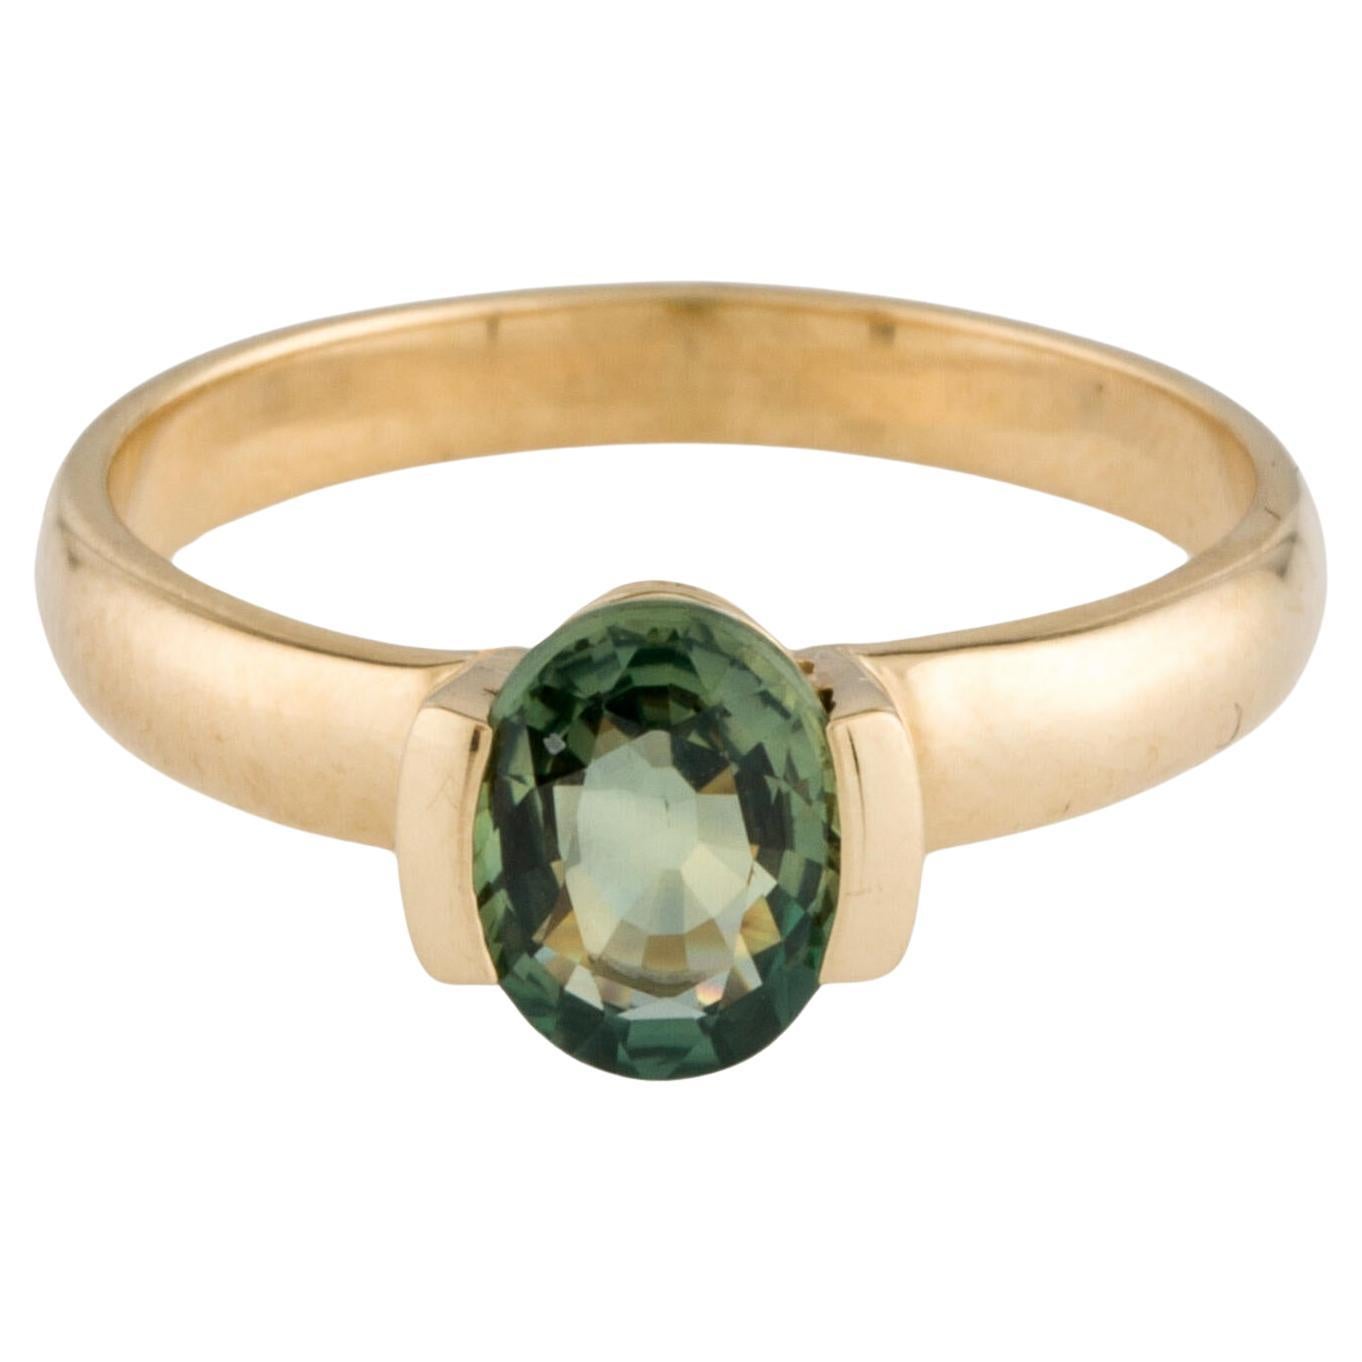 14K Sapphire Cocktail Ring 1.34ct - Size 7.75 - Elegant Statement Jewelry